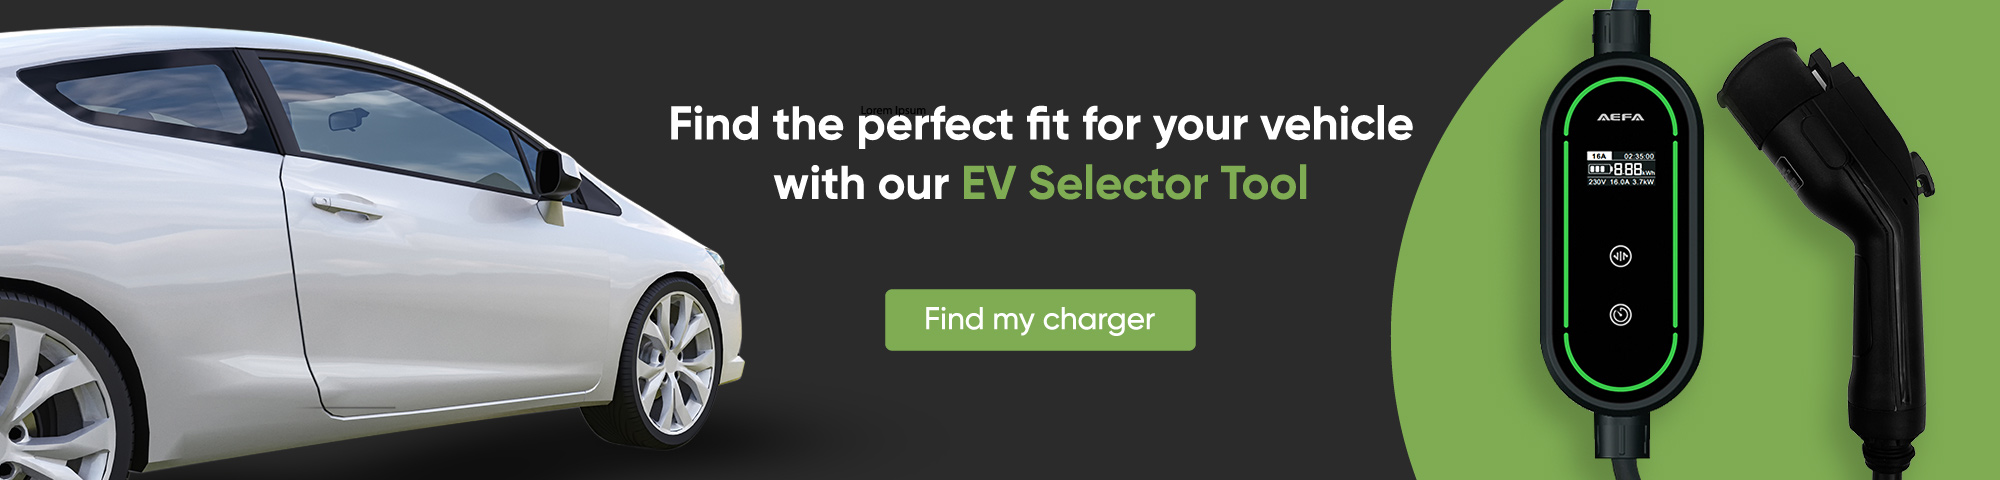 EV Selector Tool